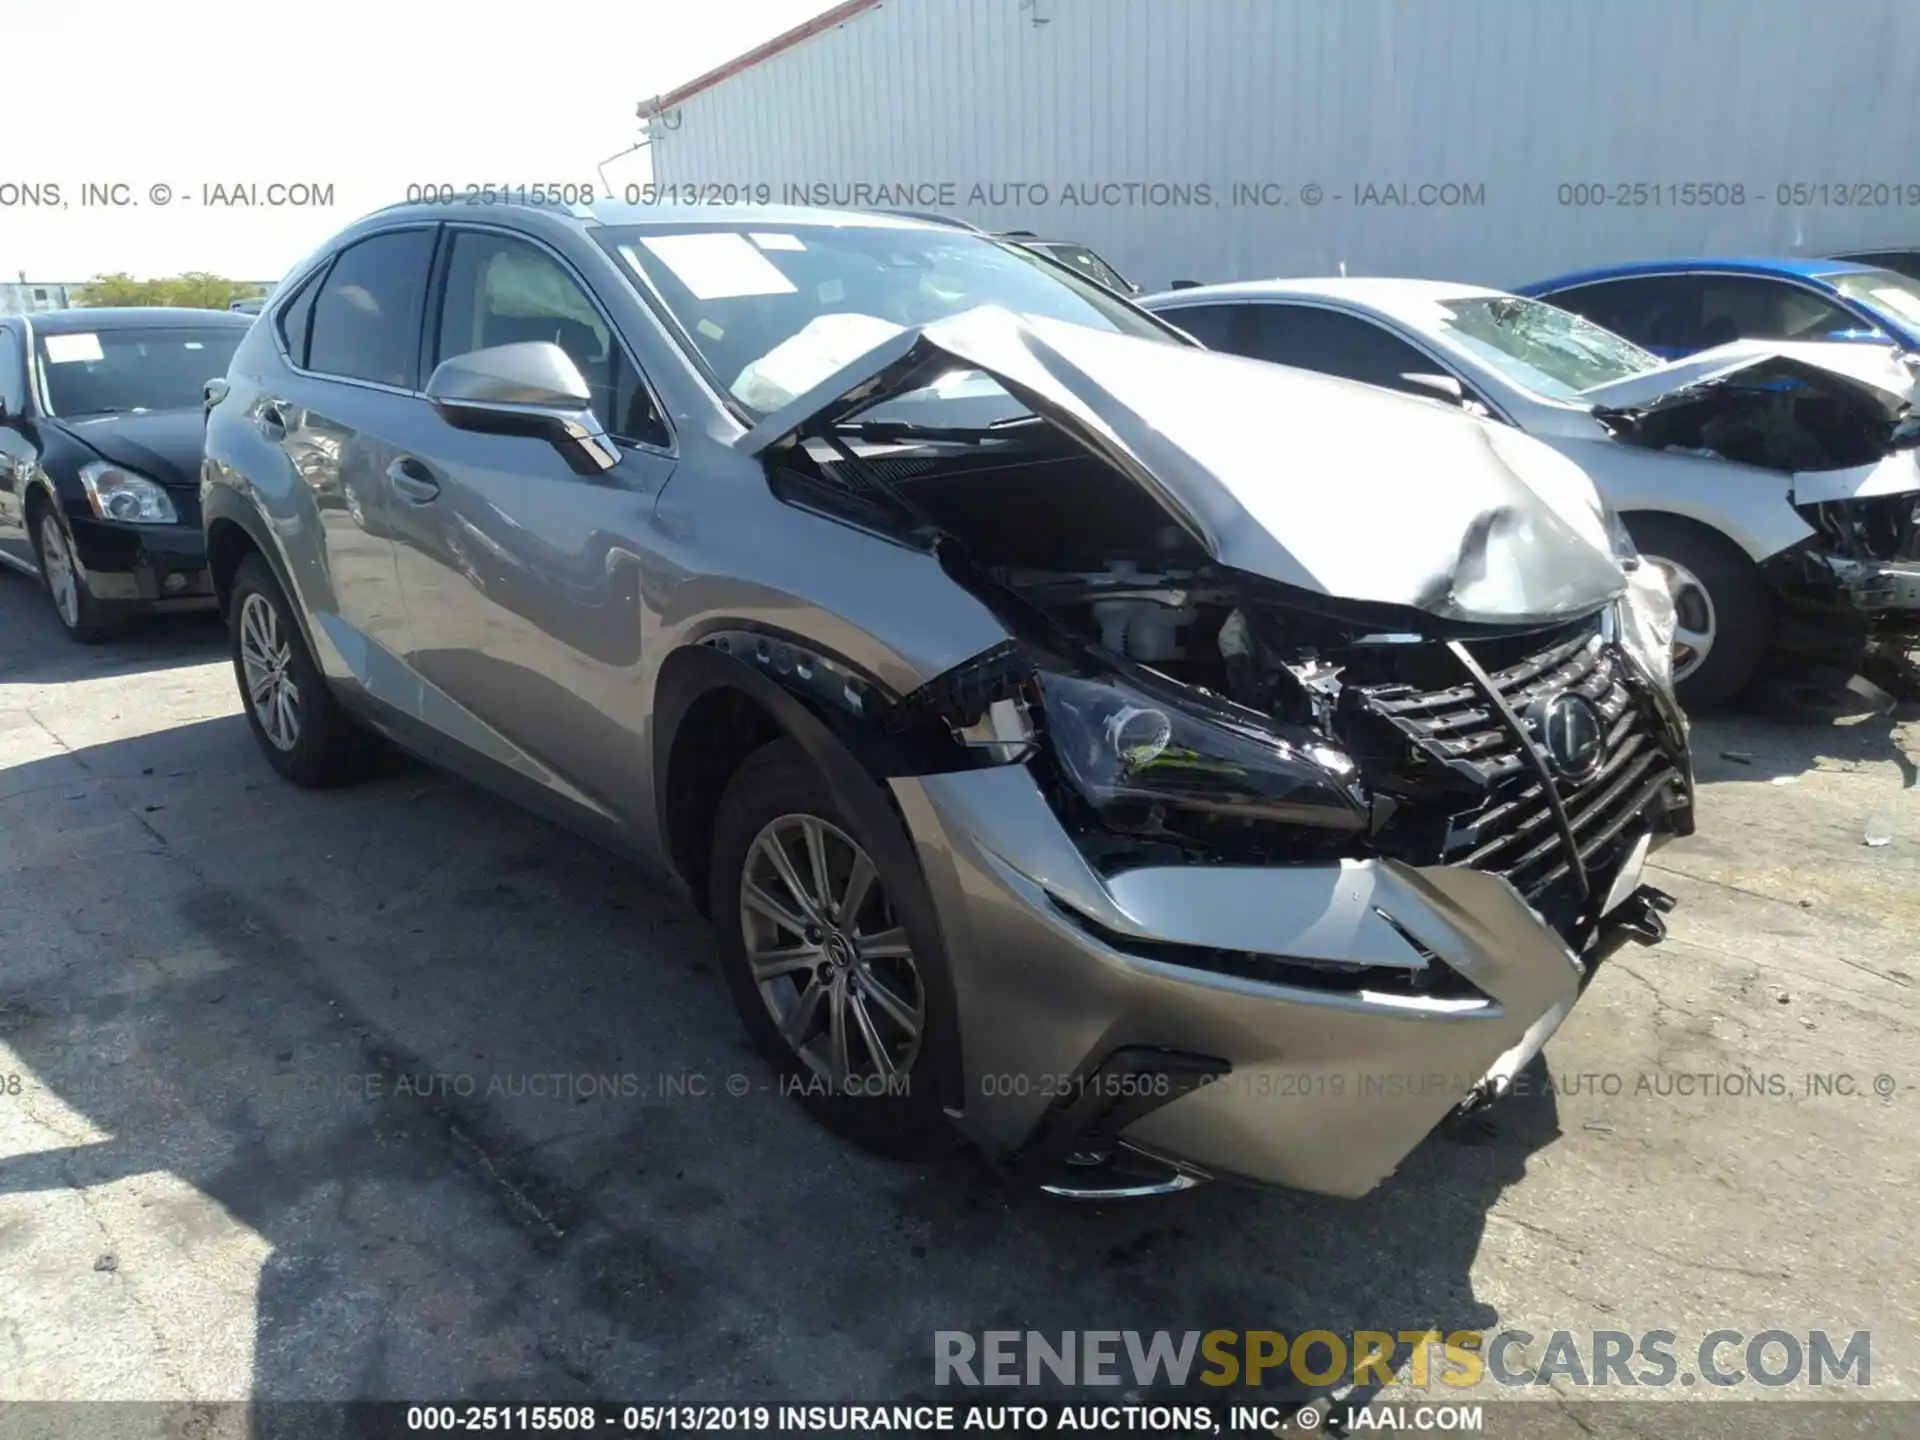 1 Photograph of a damaged car JTJYARBZ6K2150361 LEXUS NX 2019